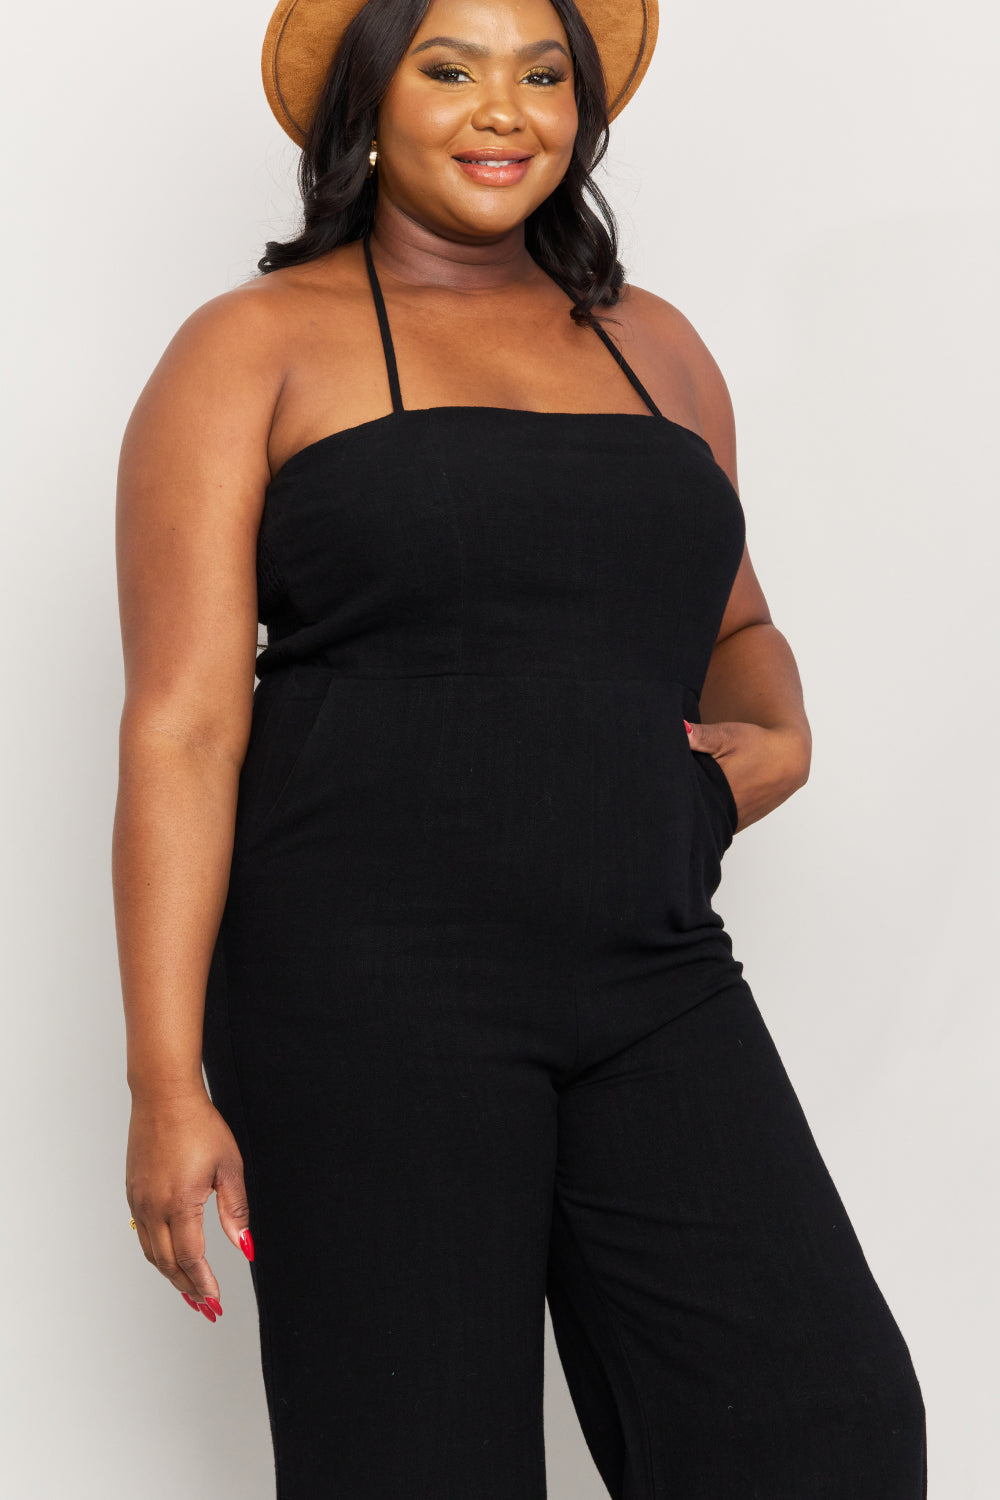 Woman modeling black halter neck wide leg jumpsuit.